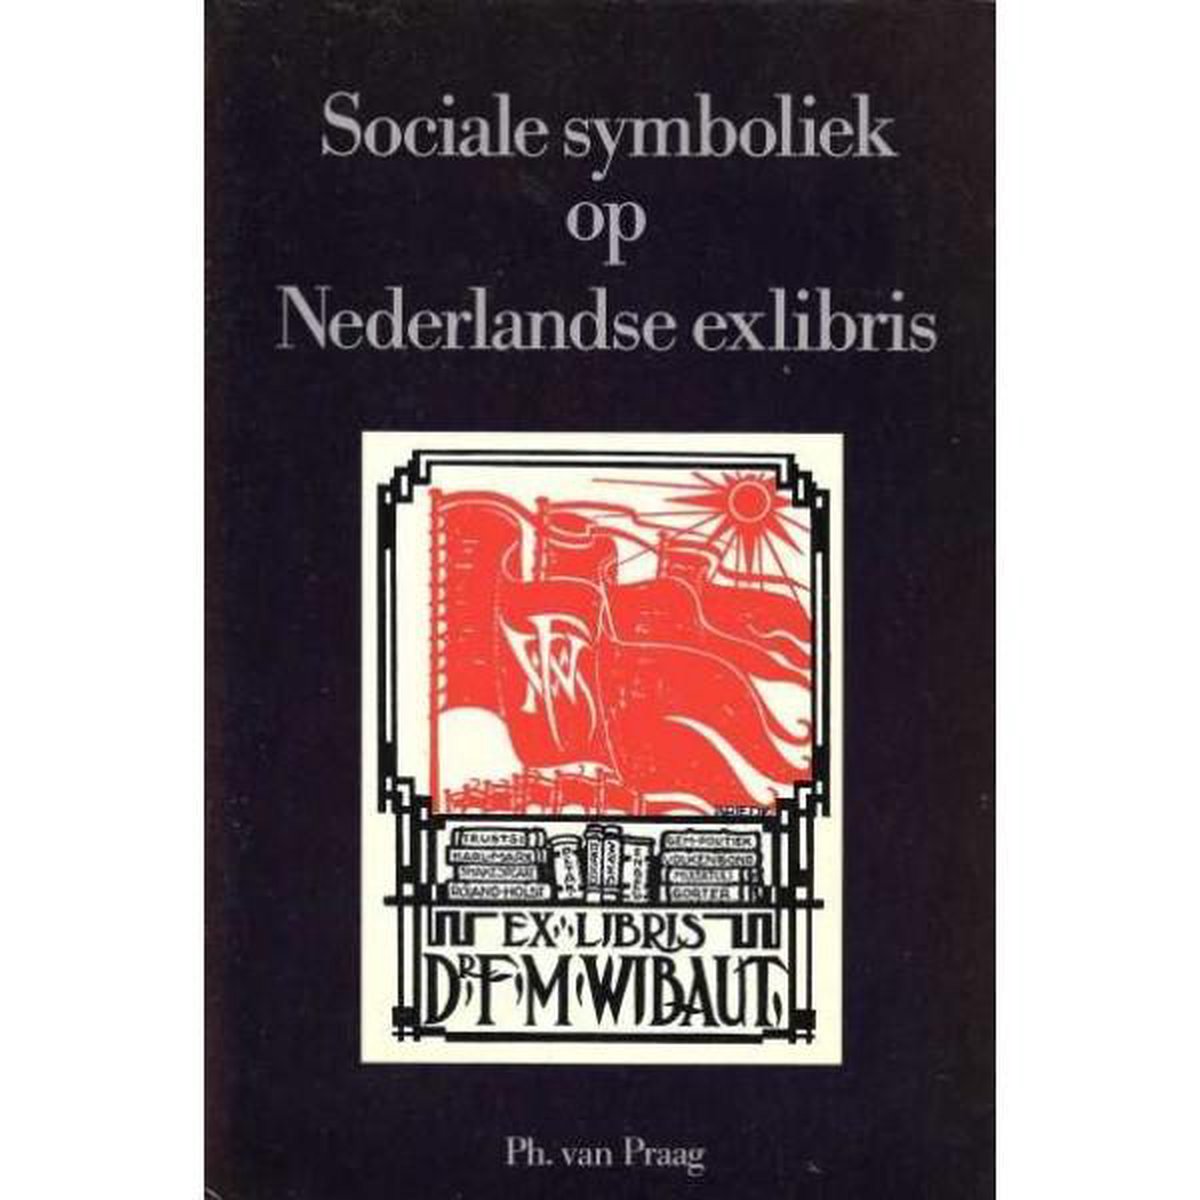 Sociale symboliek op Nederlandsce exlibris - Ph. van Praag